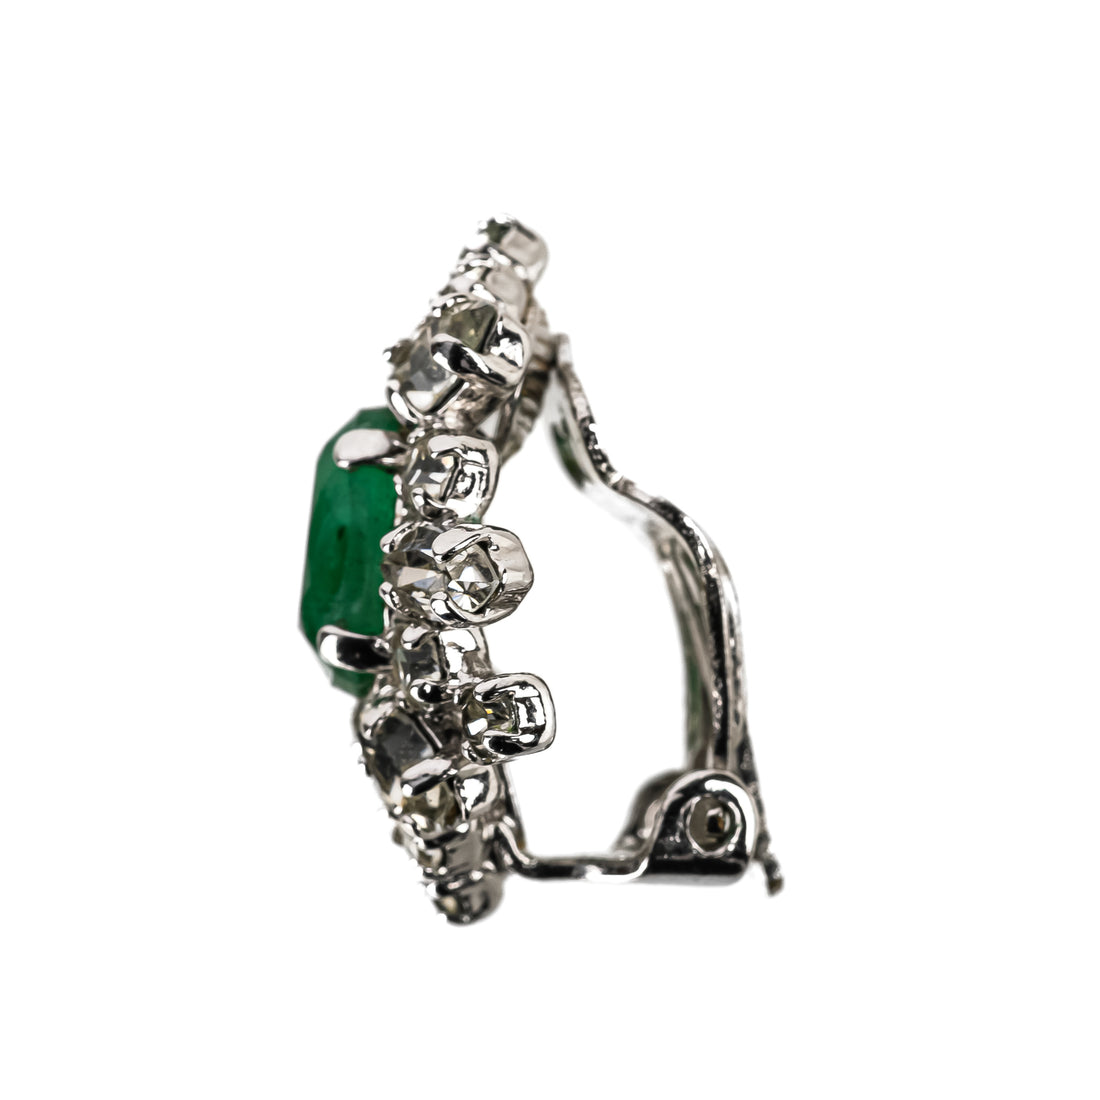 BE COOK London Silver Tone Faux Emerald & Rhinestone Clip Earrings